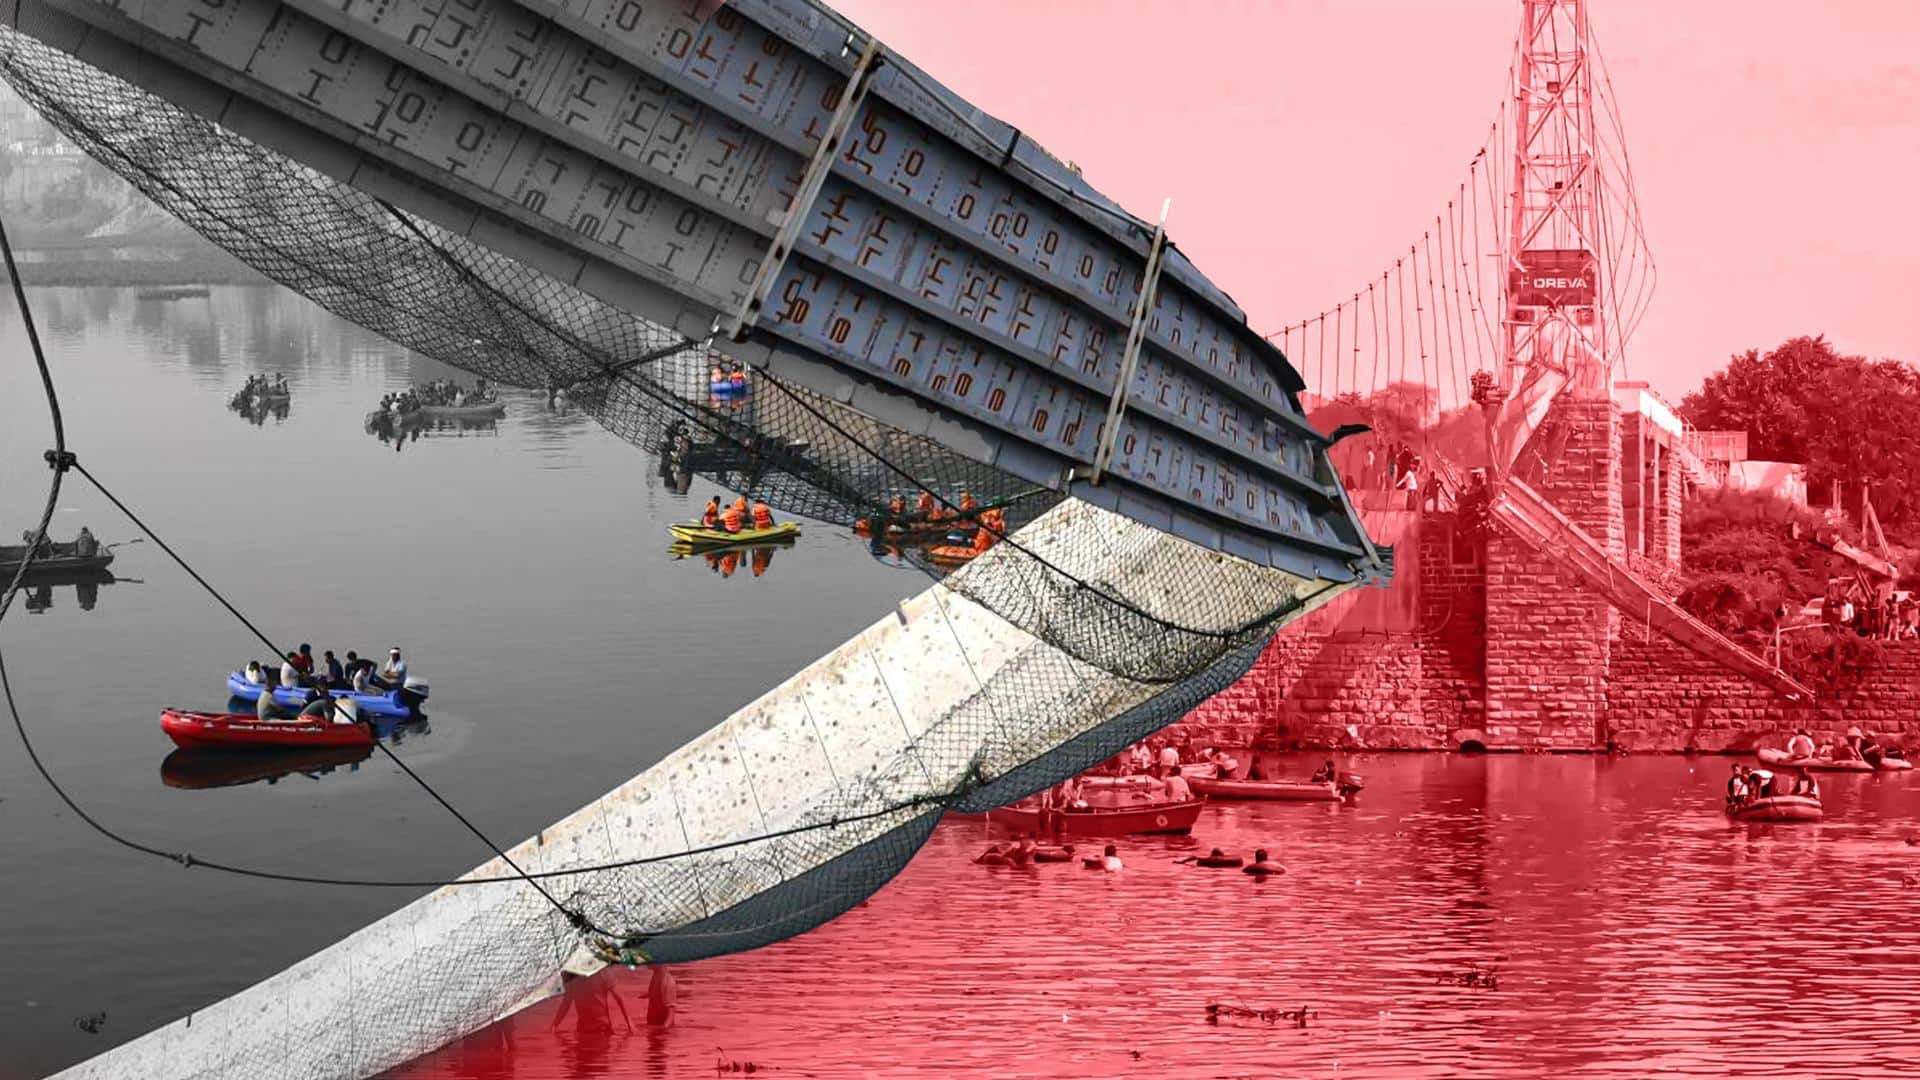 Morbi bridge collapse: Half of cables had broken before tragedy